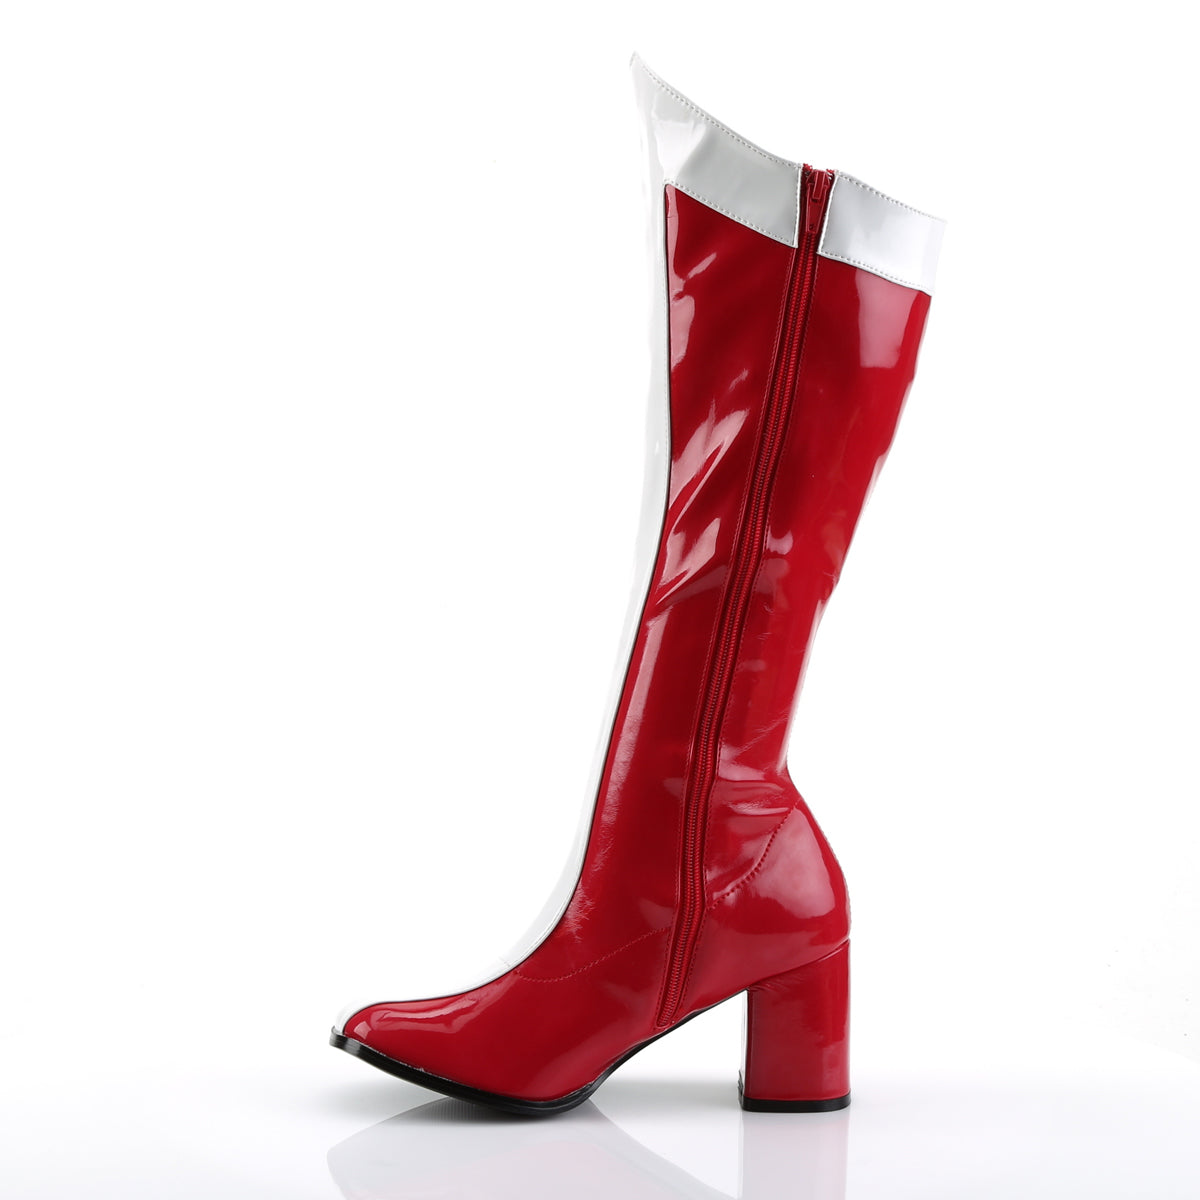 GOGO-305 3 Inch Heel Red Women's Boots Funtasma Costume Shoes 